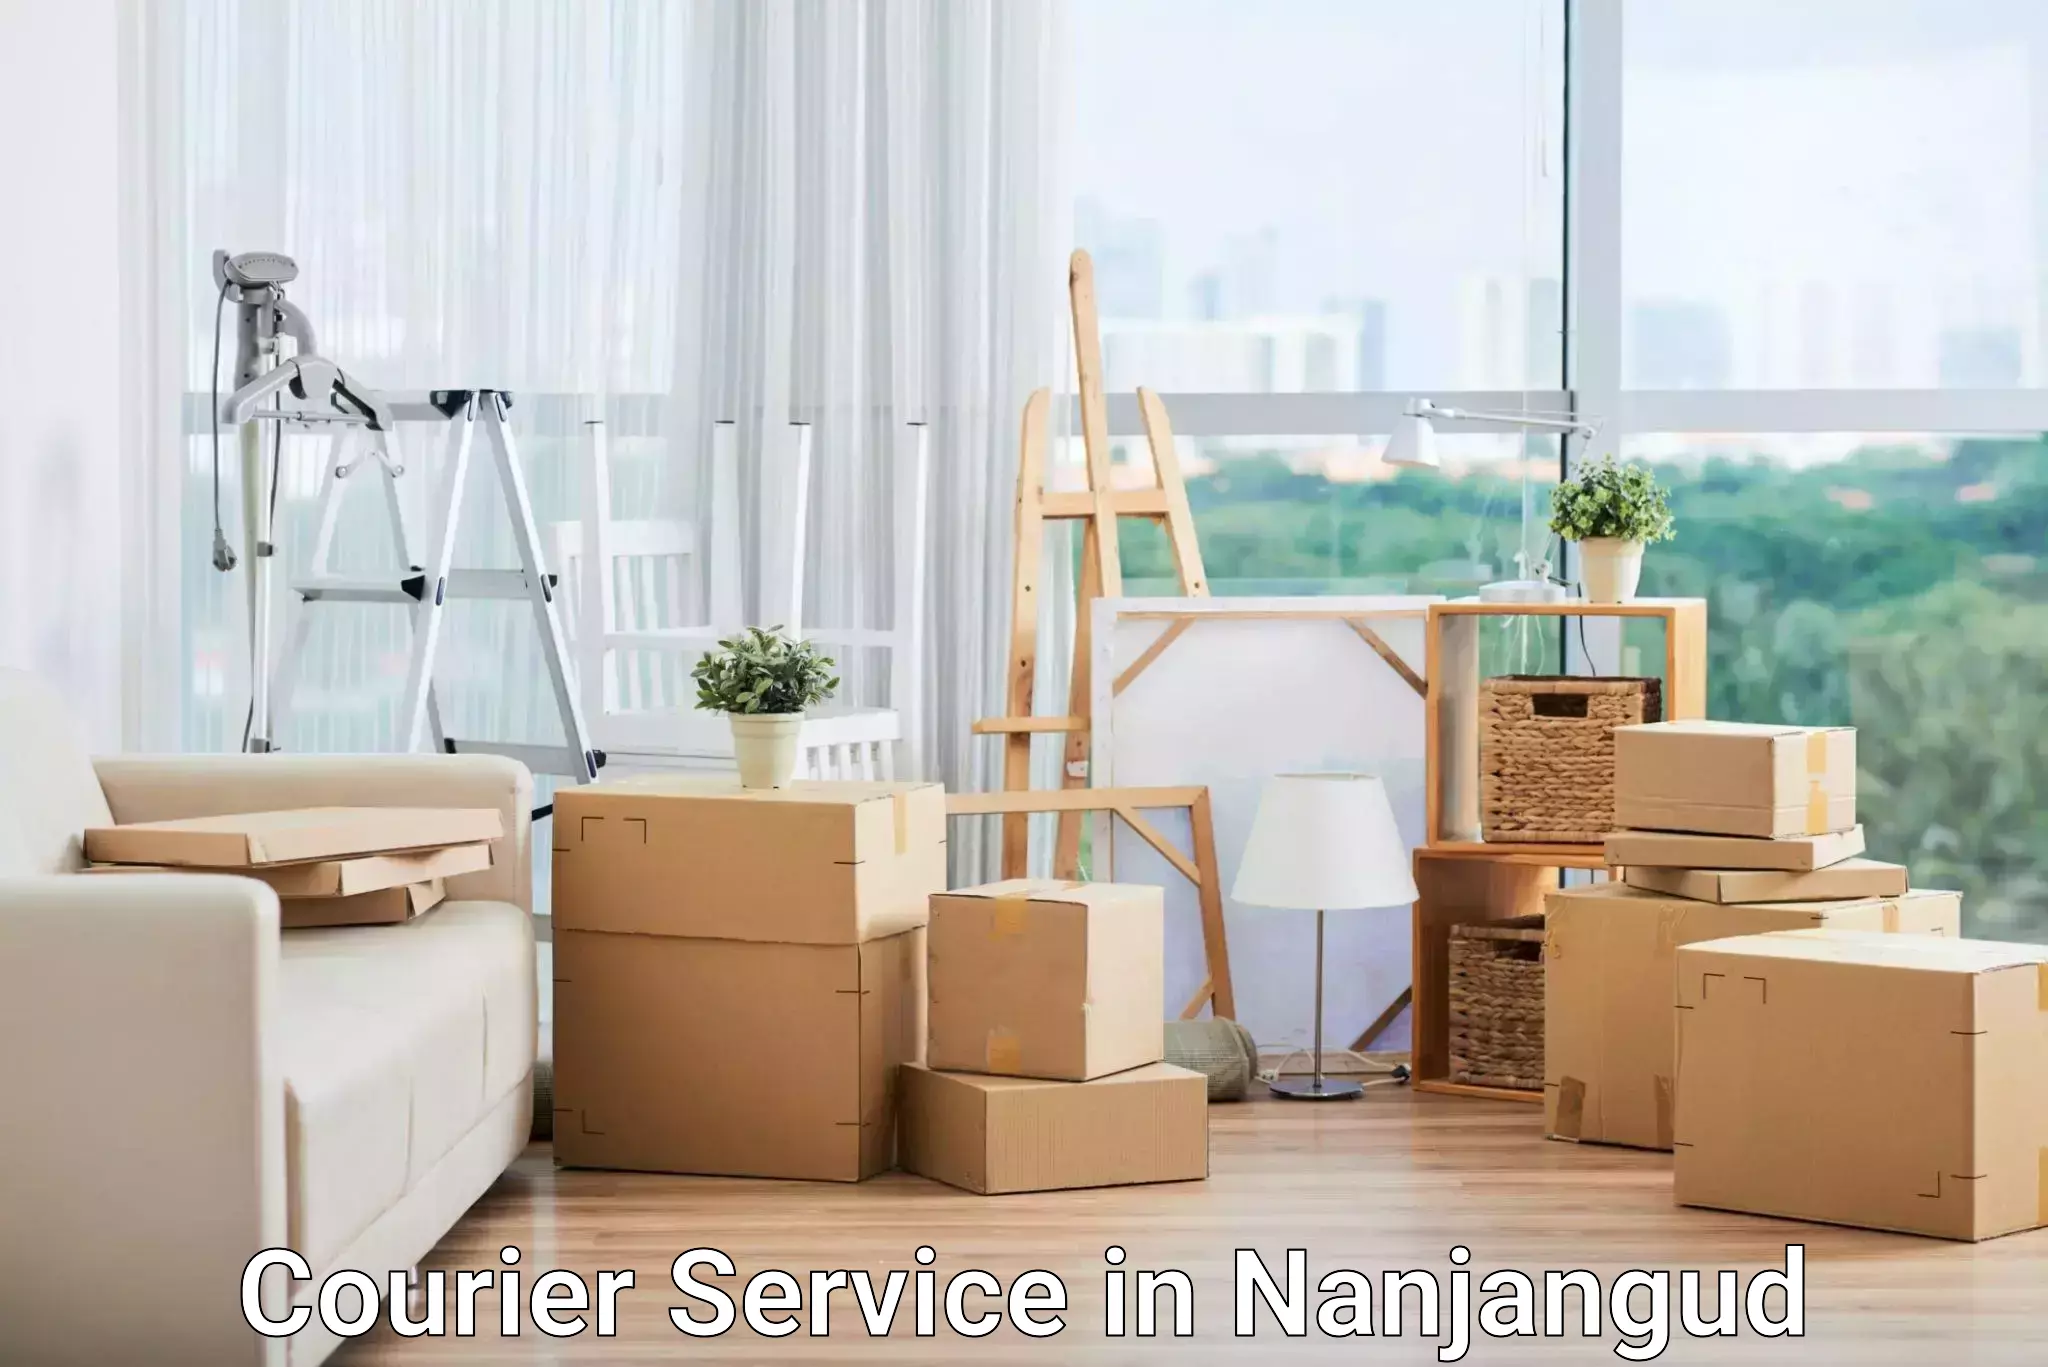 Specialized shipment handling in Nanjangud